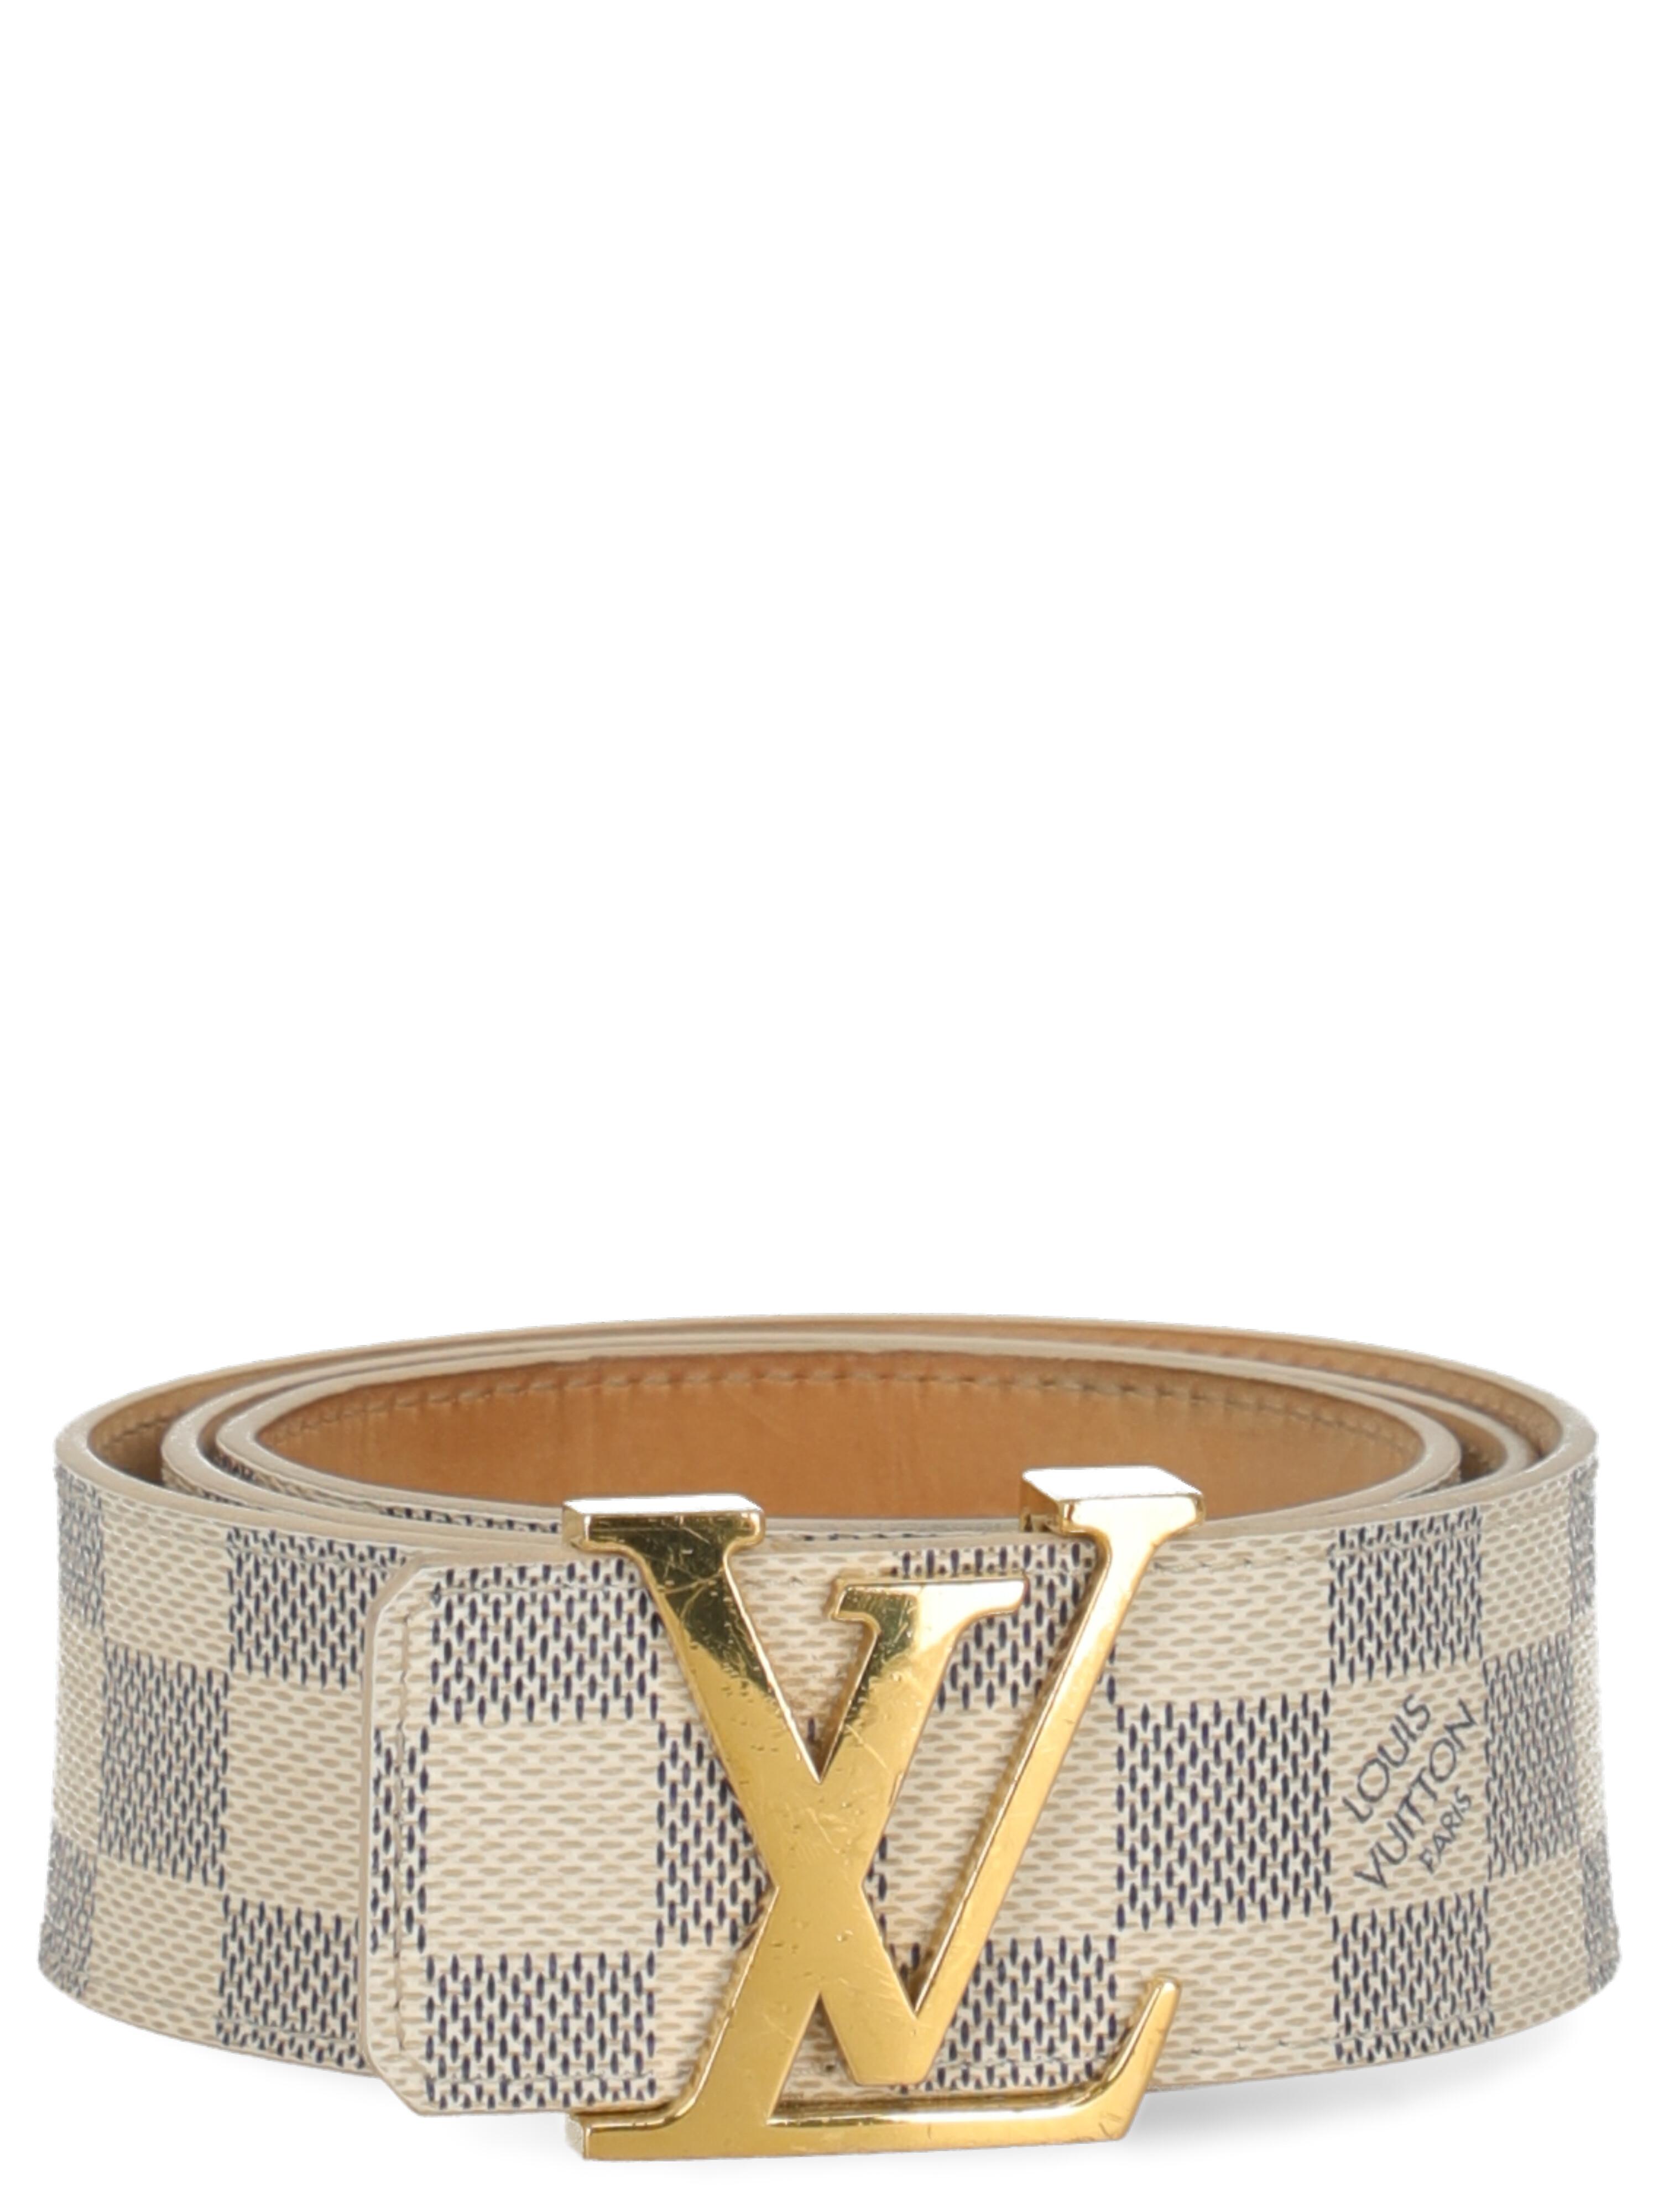 Louis Vuitton Gold Belt Buckle With Diamond Pavé  vetobencom